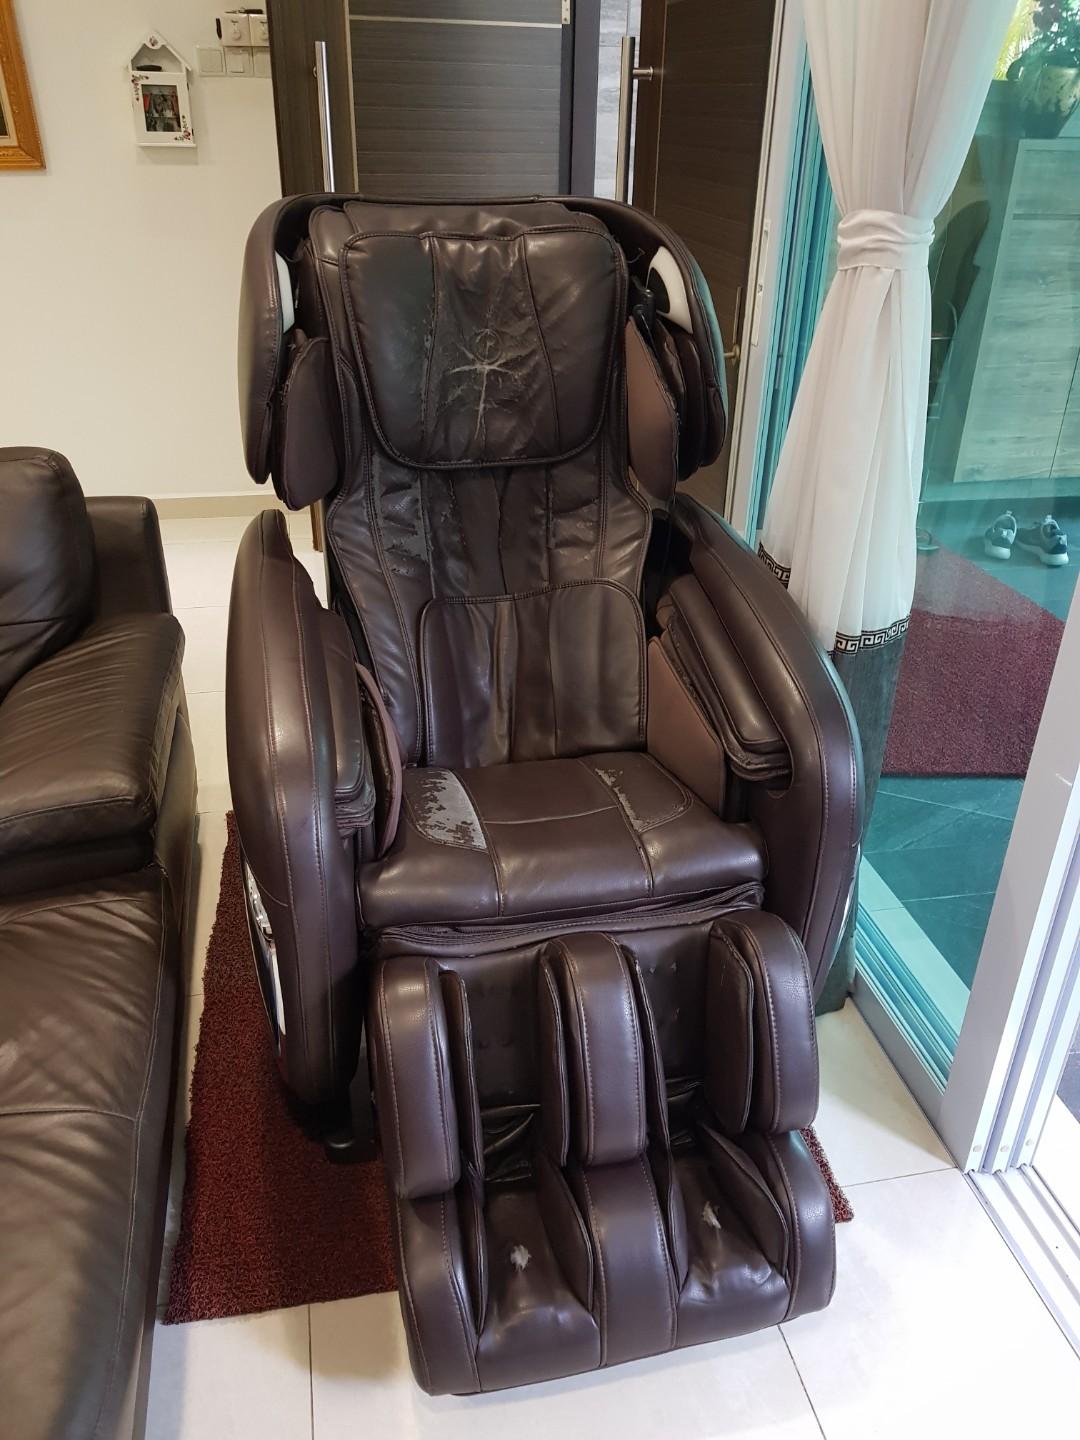 Ottawa Smart Delight Plus Massage Chair Furniture Others On